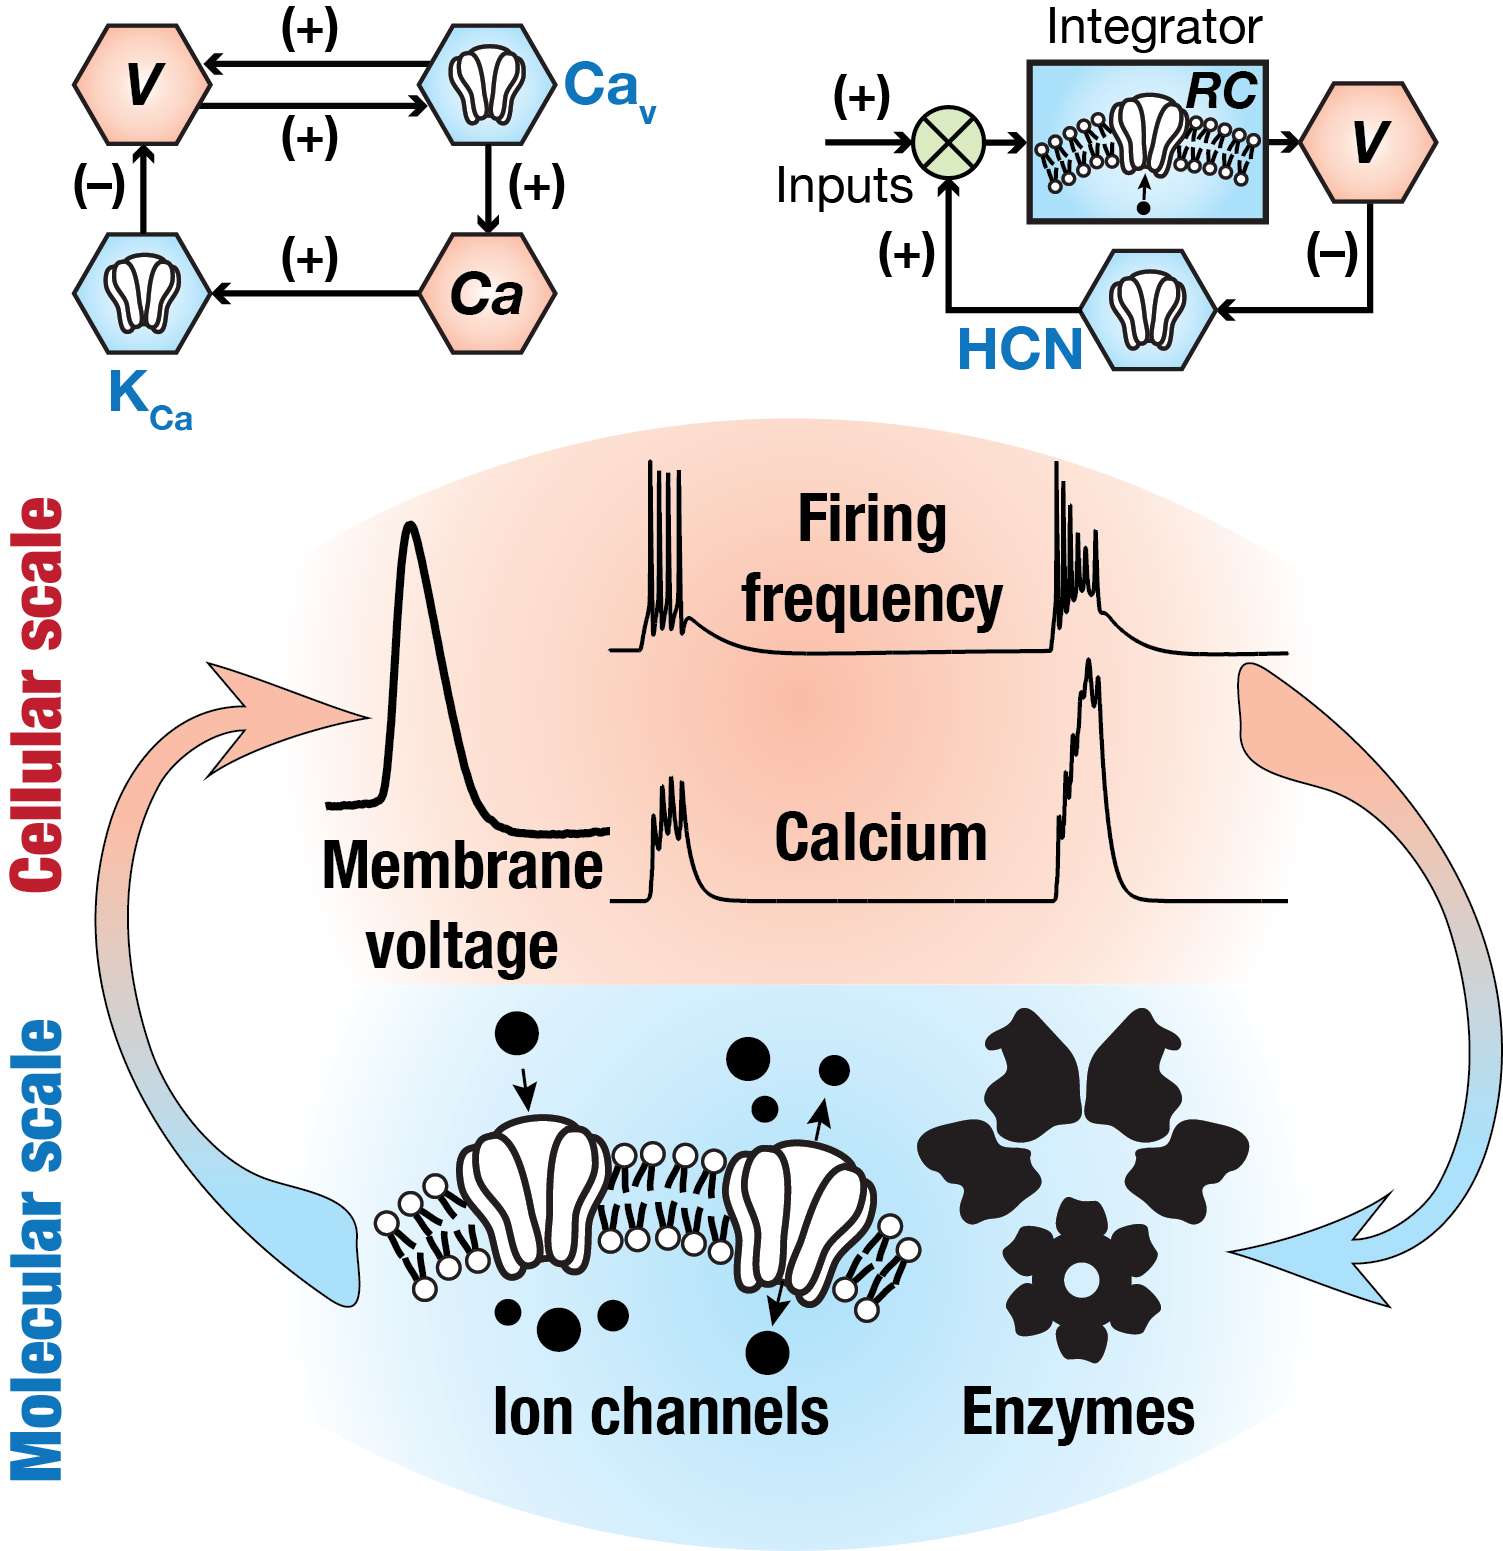 Network motifs in cellular neurophysiology